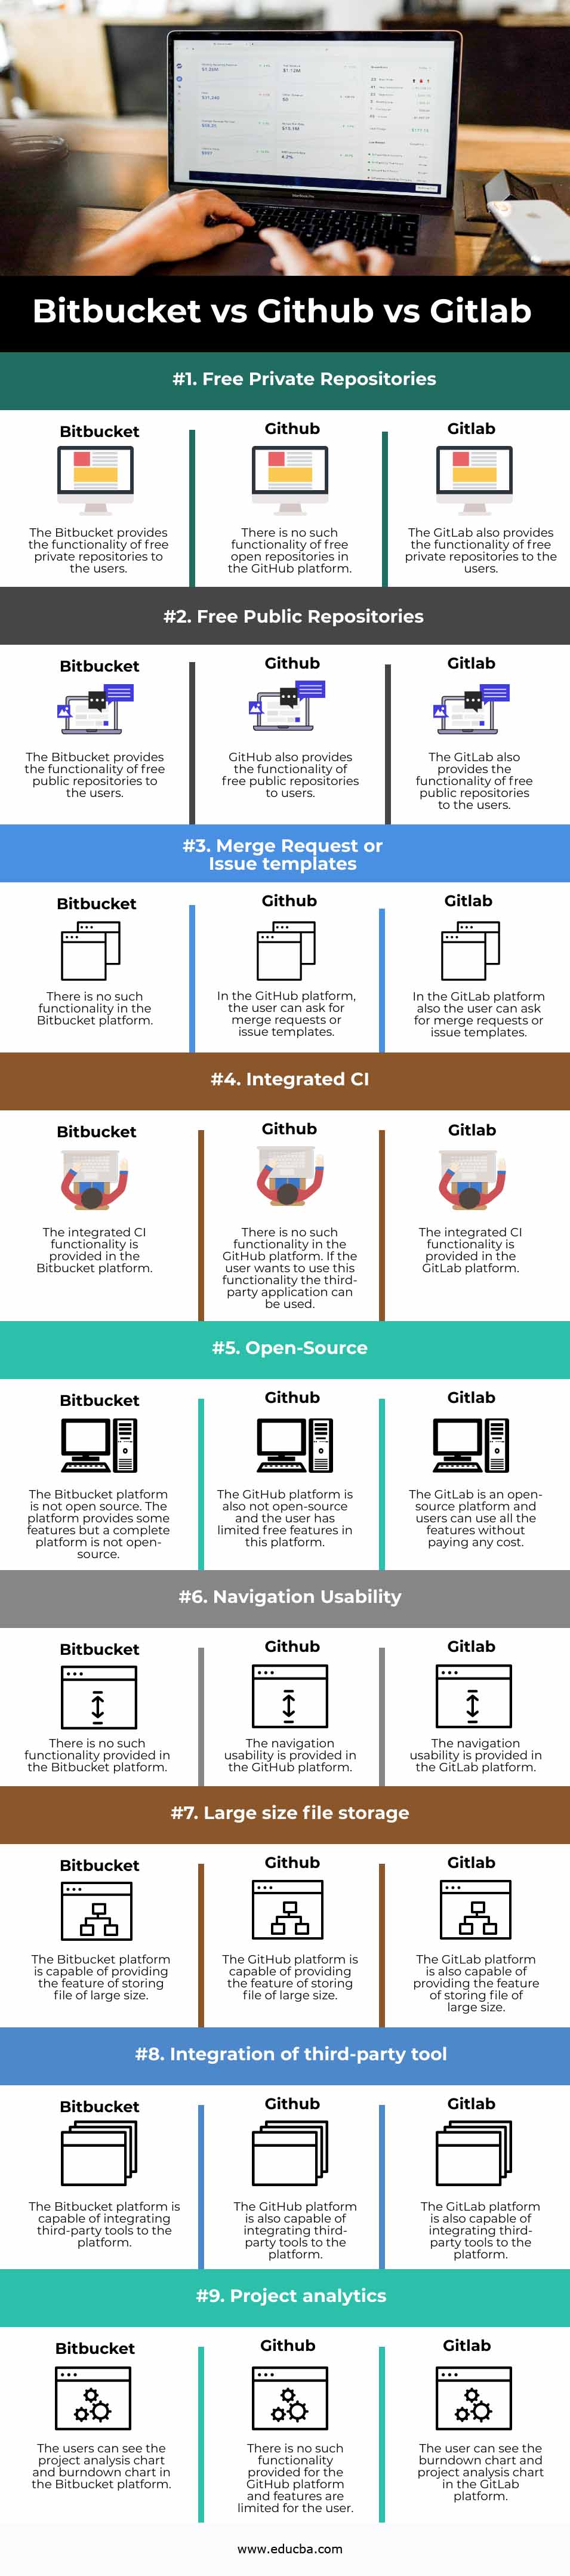 Bitbucket vs Github vs Gitlab info